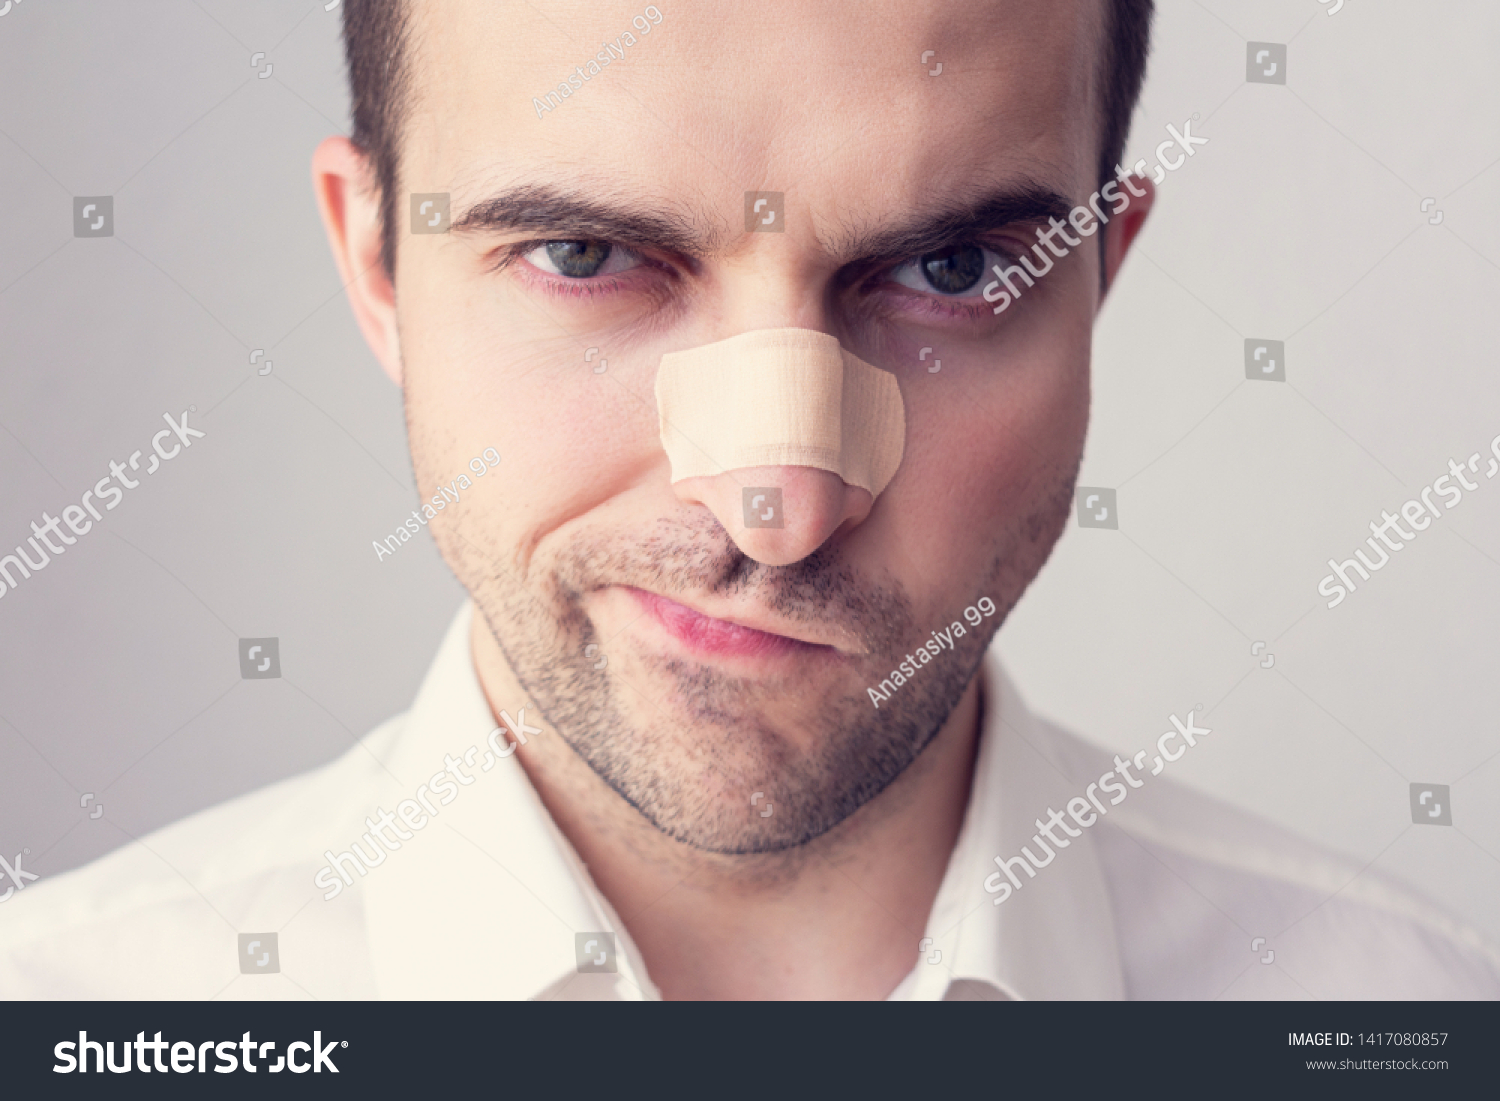 broken nose close up